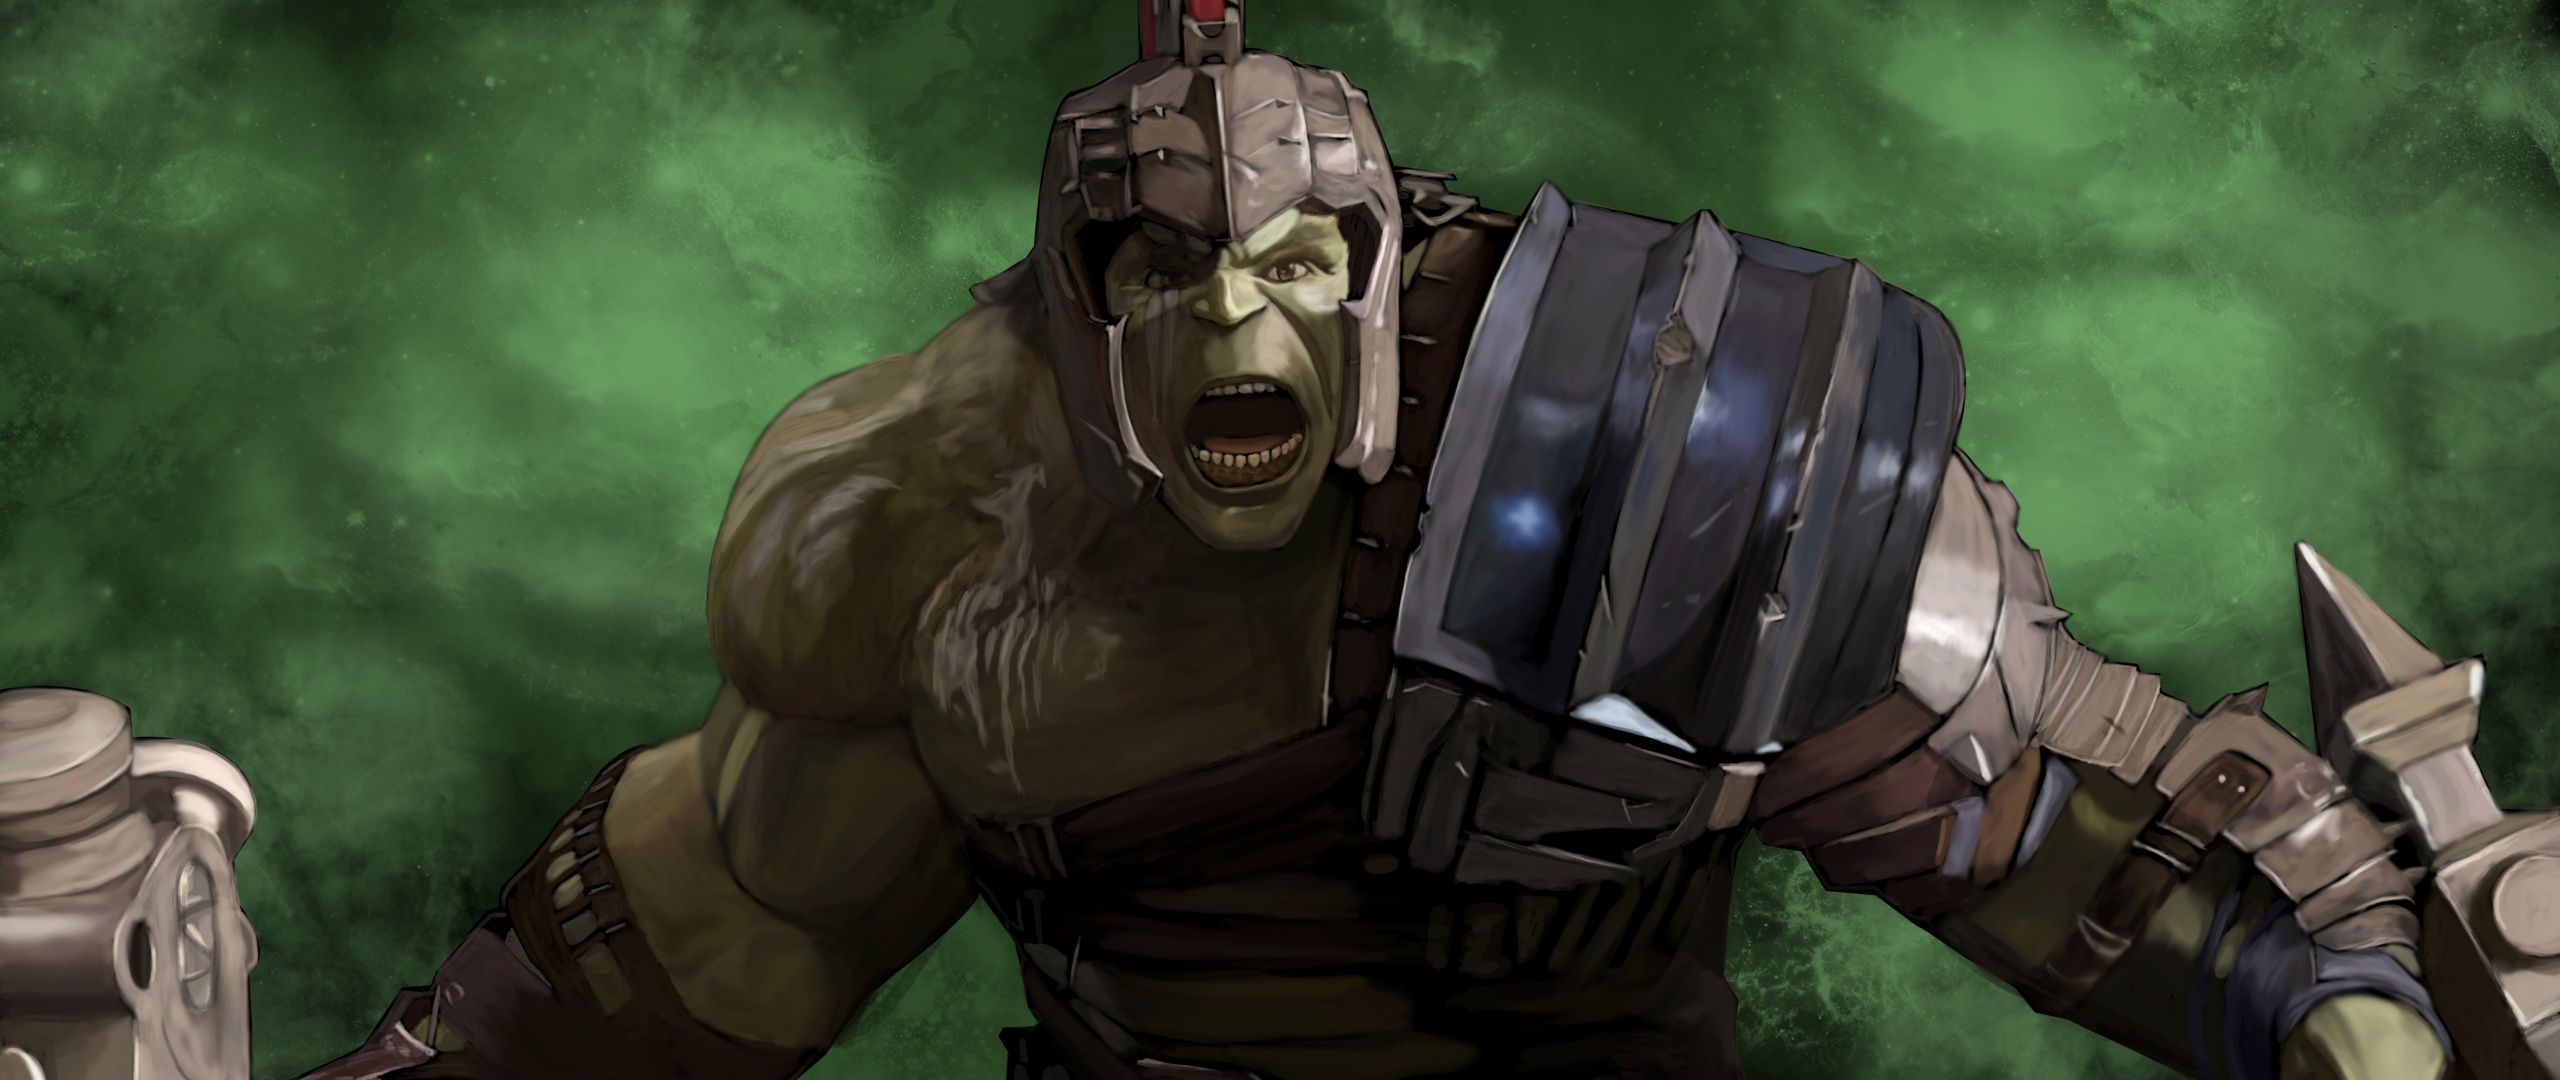 Download 2560x1080 wallpaper hulk, gladiator, superhero, artwork